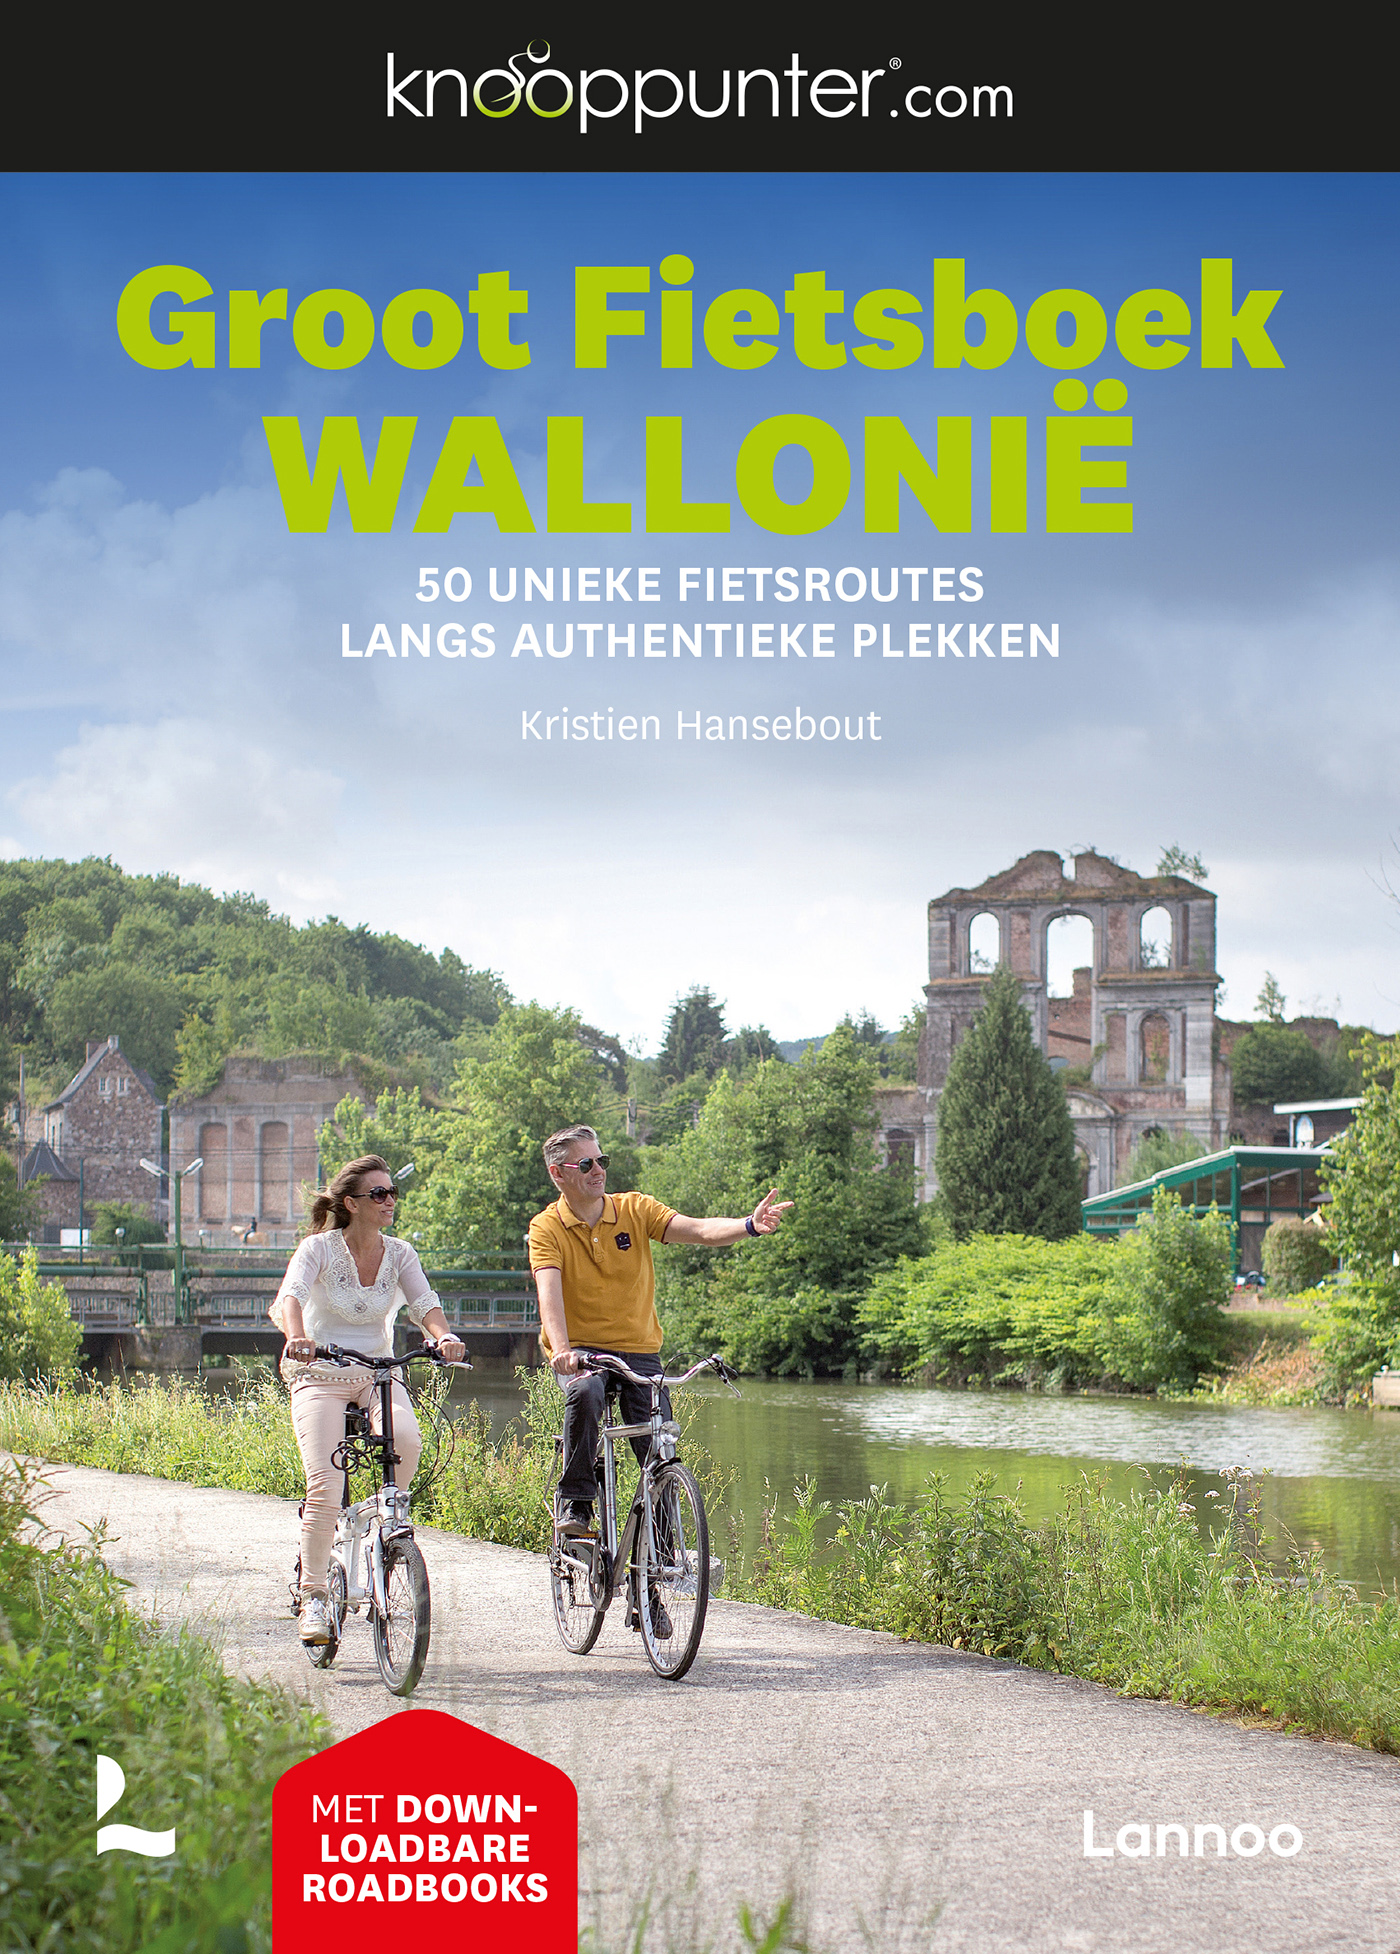 Knooppunter -  Groot Fietsboek Wallonië